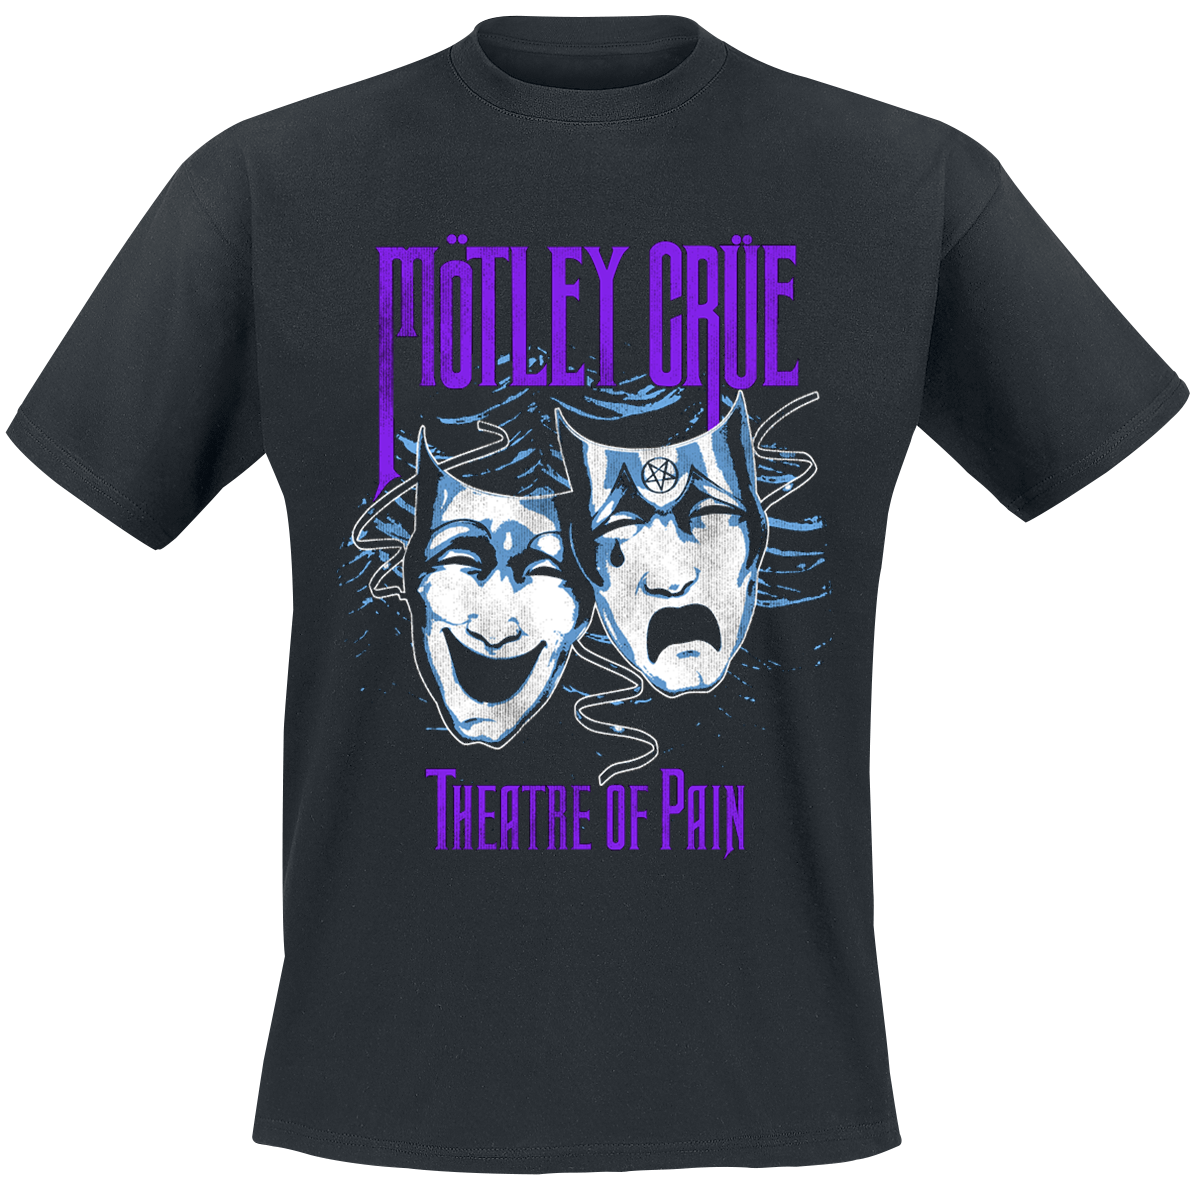 Mötley Crüe - Theatre Of Pain - T-Shirt - black image